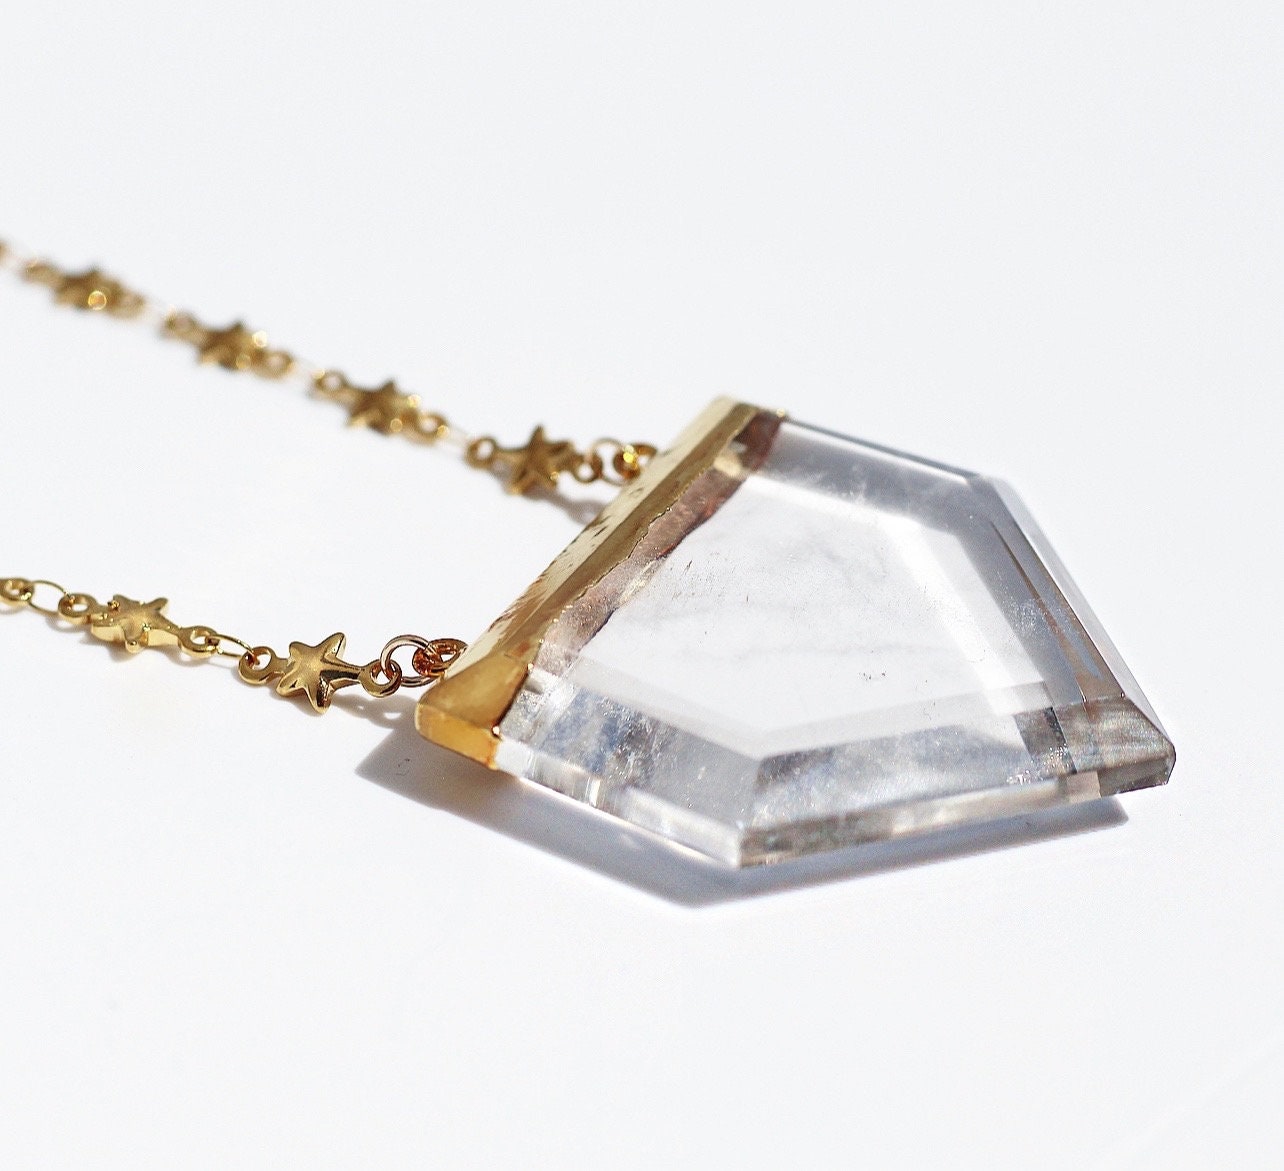 Large Quartz Point Necklace with Tiny Star Chain, Big Terminated Crystal, Quartz Shield Pendant Gold, Clear Quartz Necklace Silver